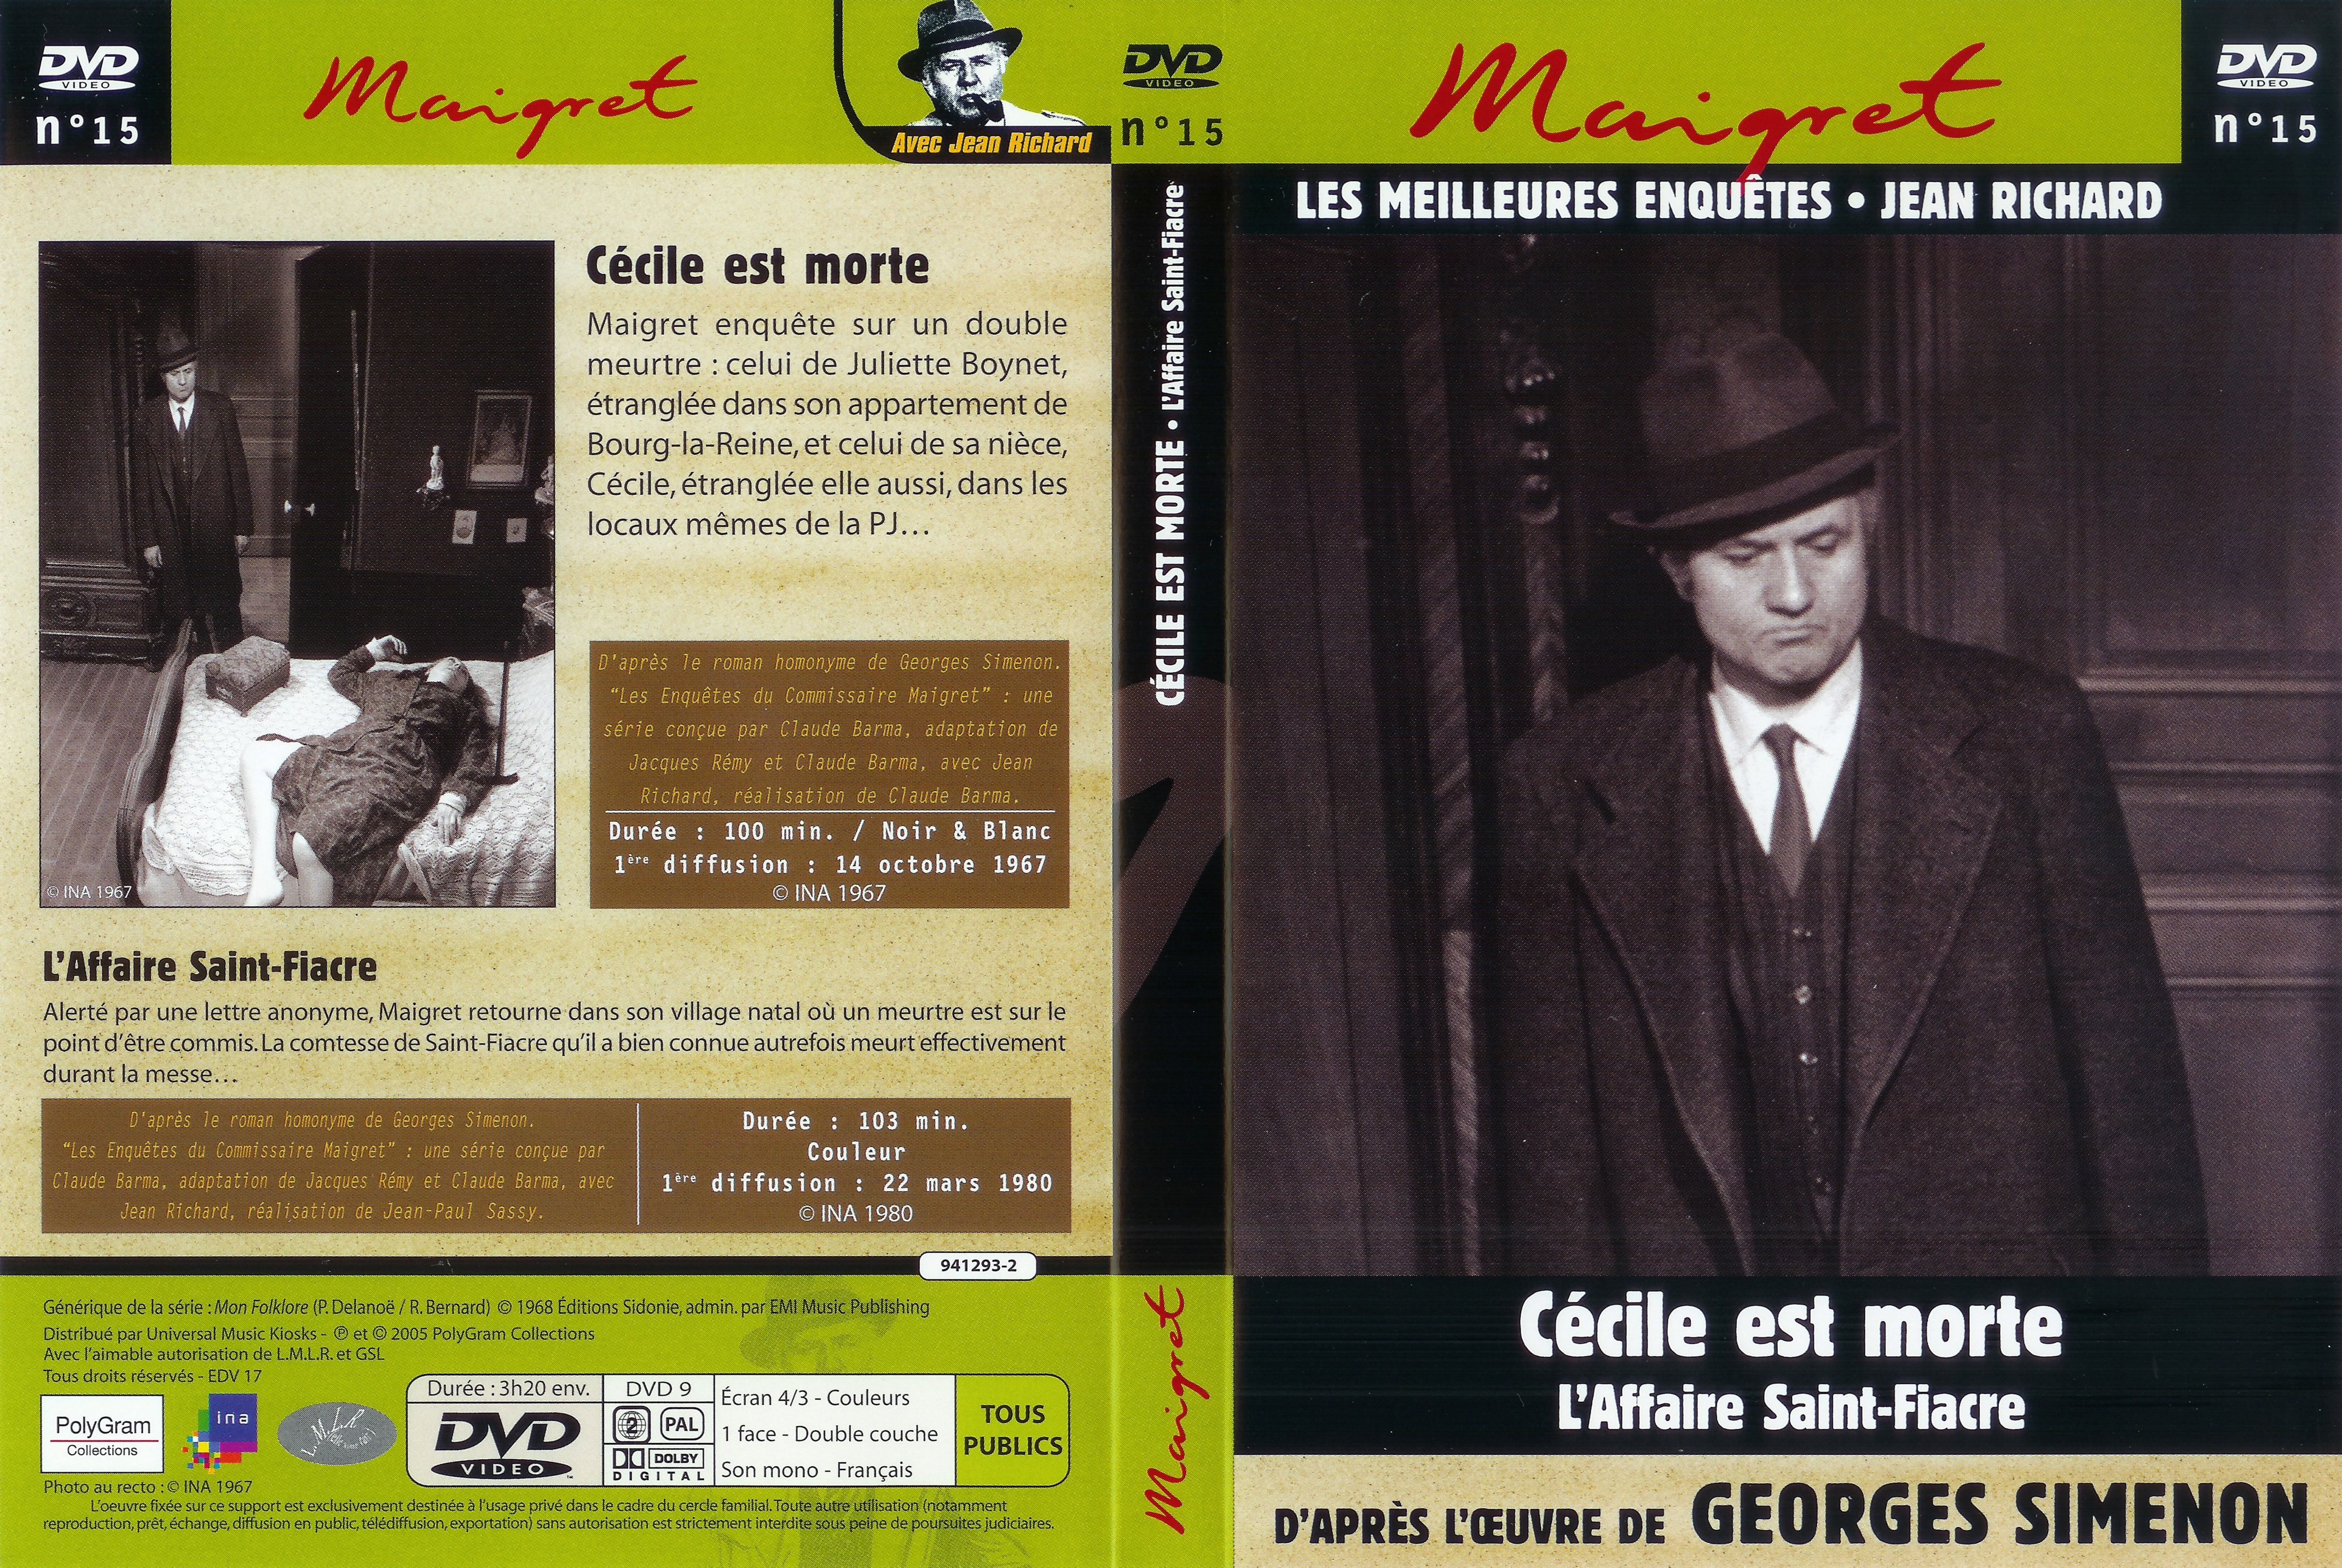 Jaquette DVD Maigret (Jean Richard) vol 15